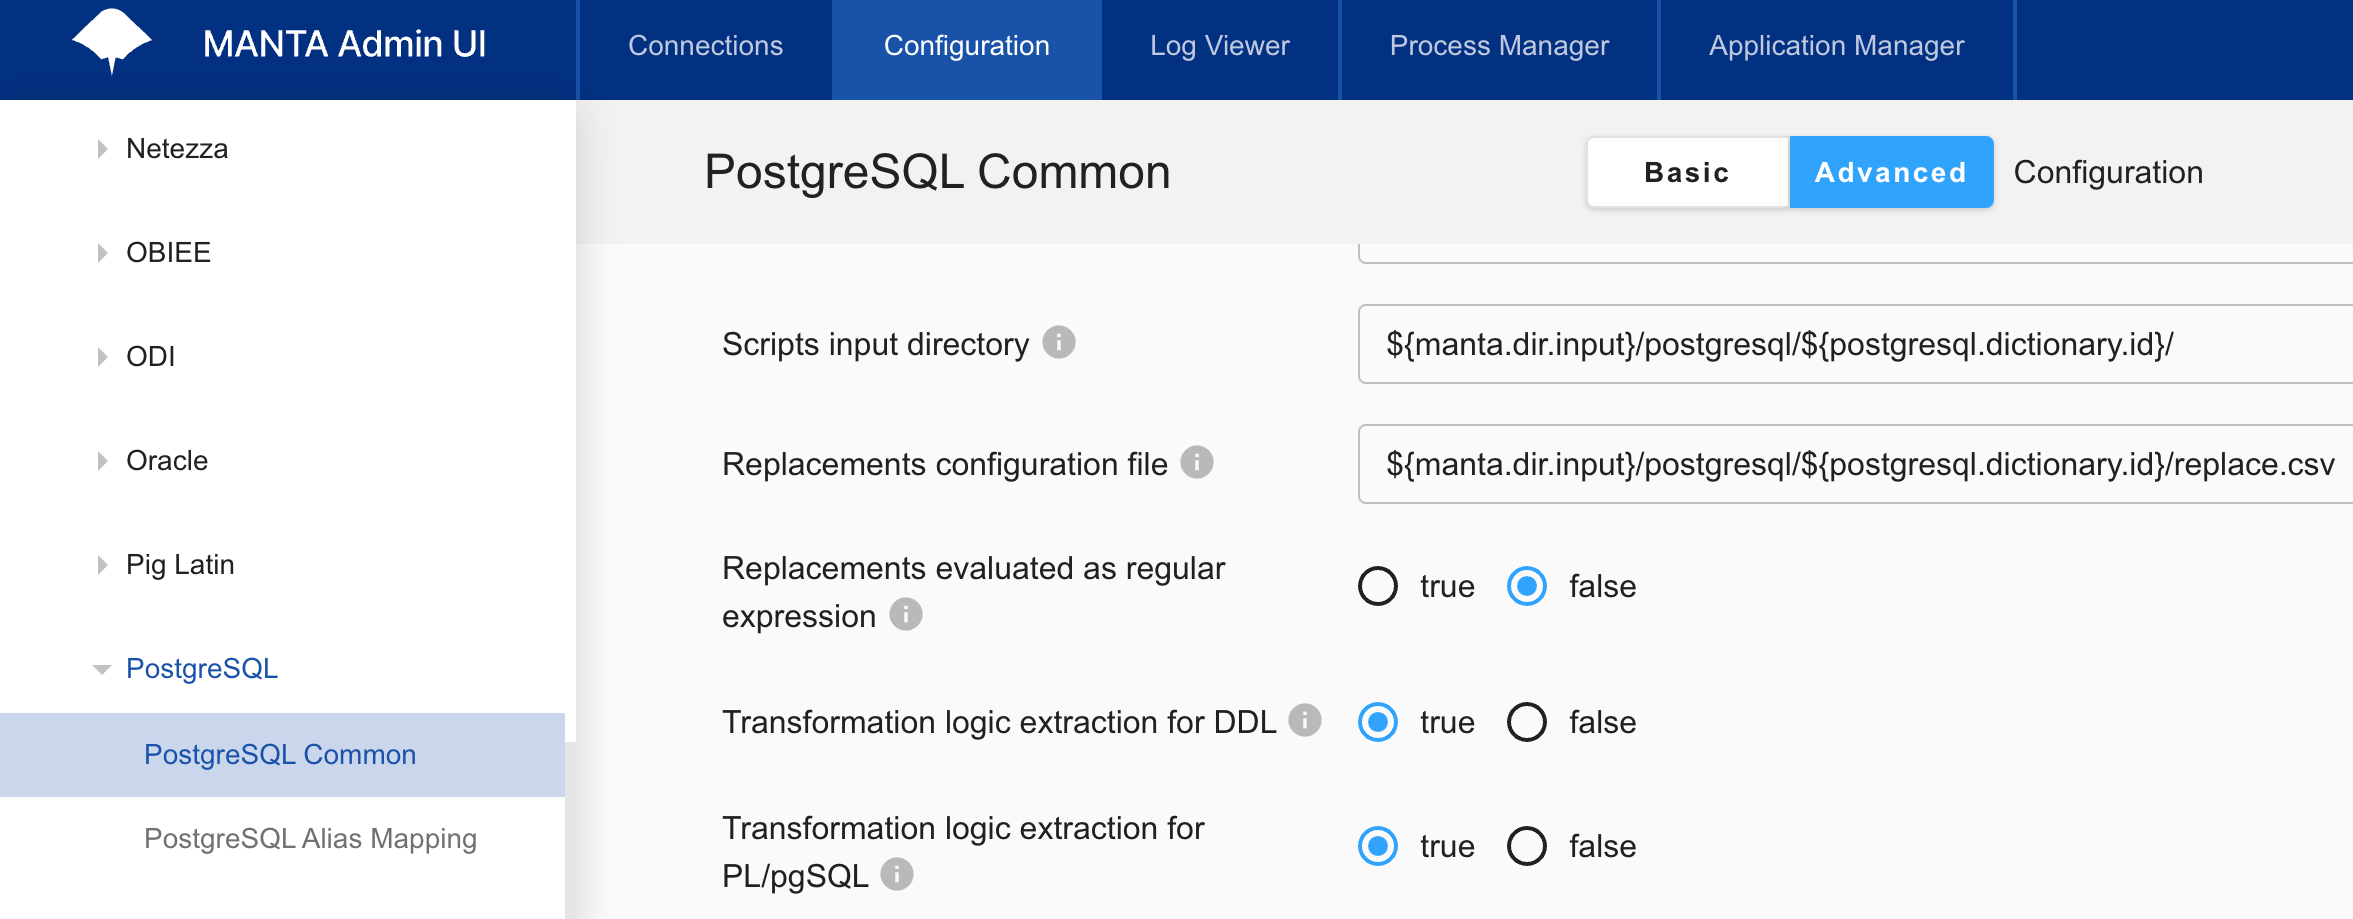 Configure transformation logic extraction for PostgreSQL